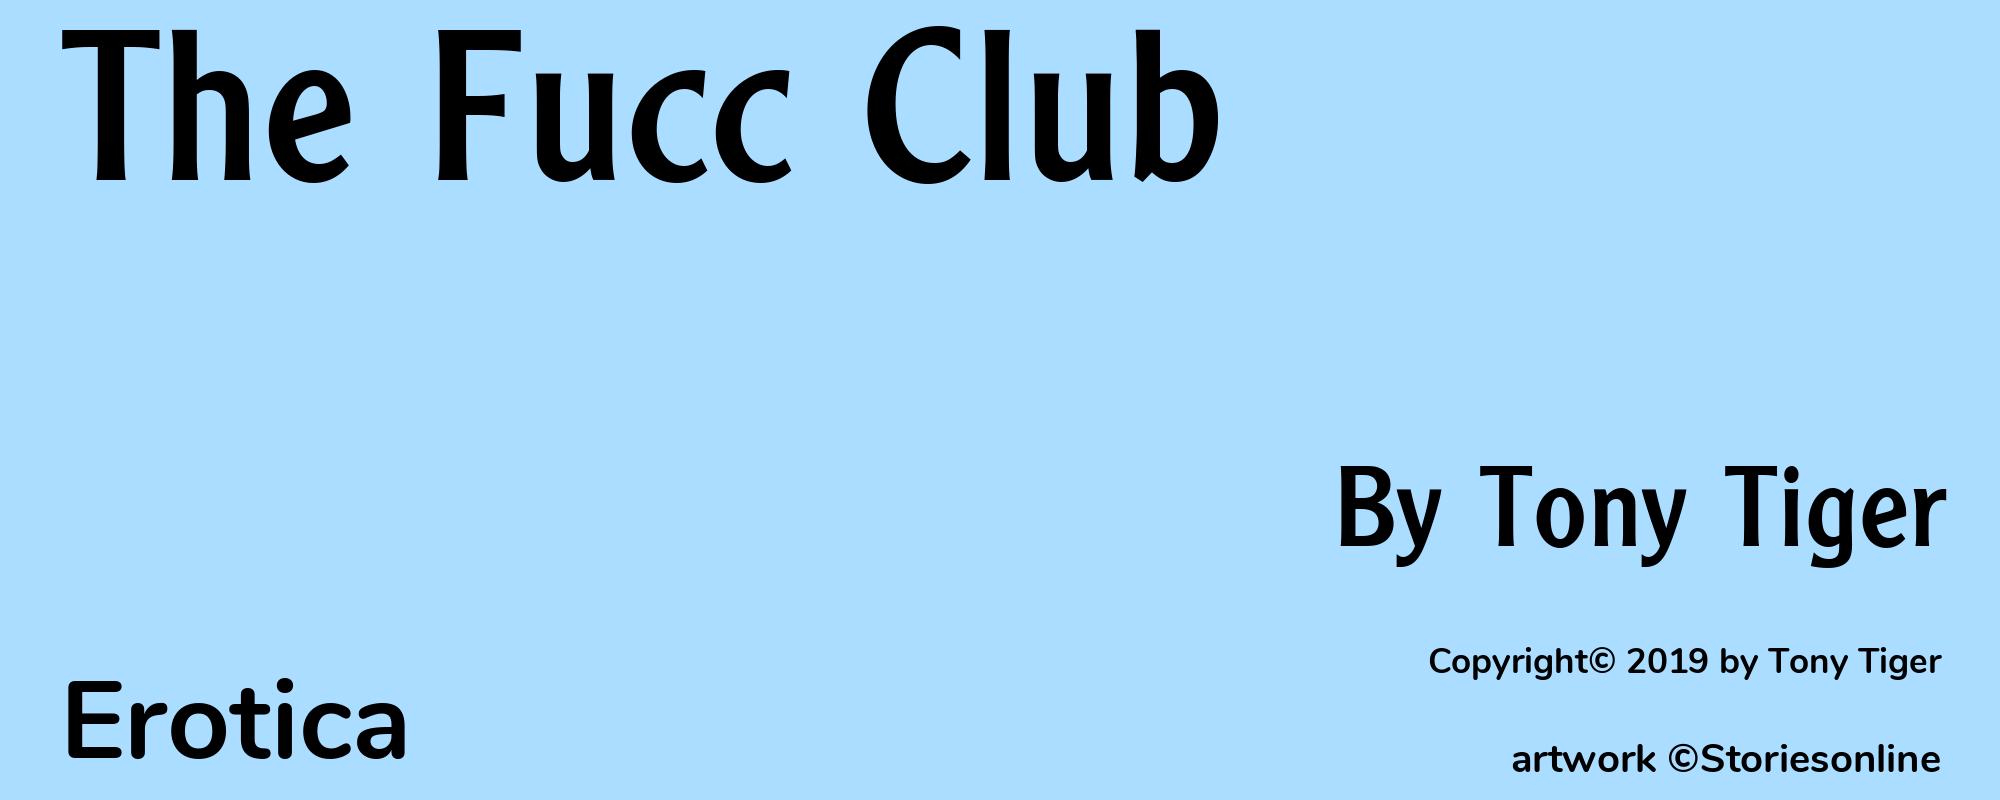 The Fucc Club - Cover